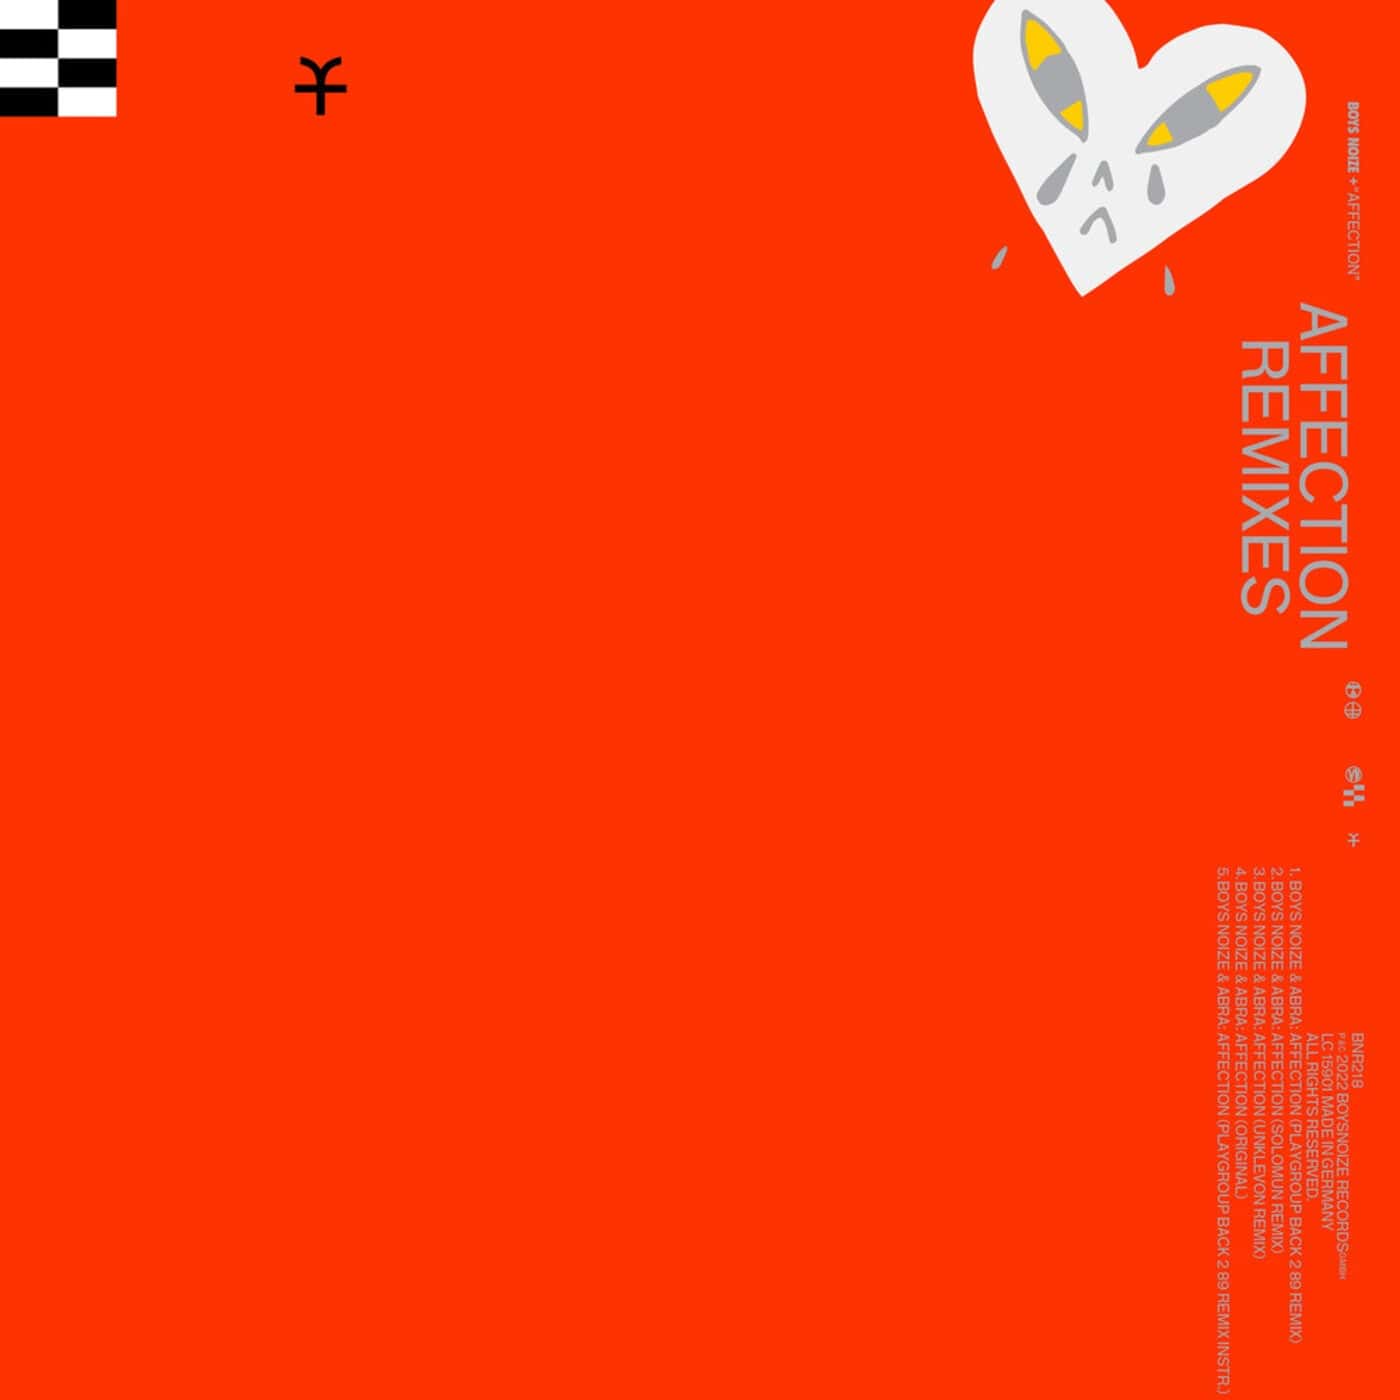 image cover: Boys Noize, ABRA (USA) - Affection (Remixes) / BNR218